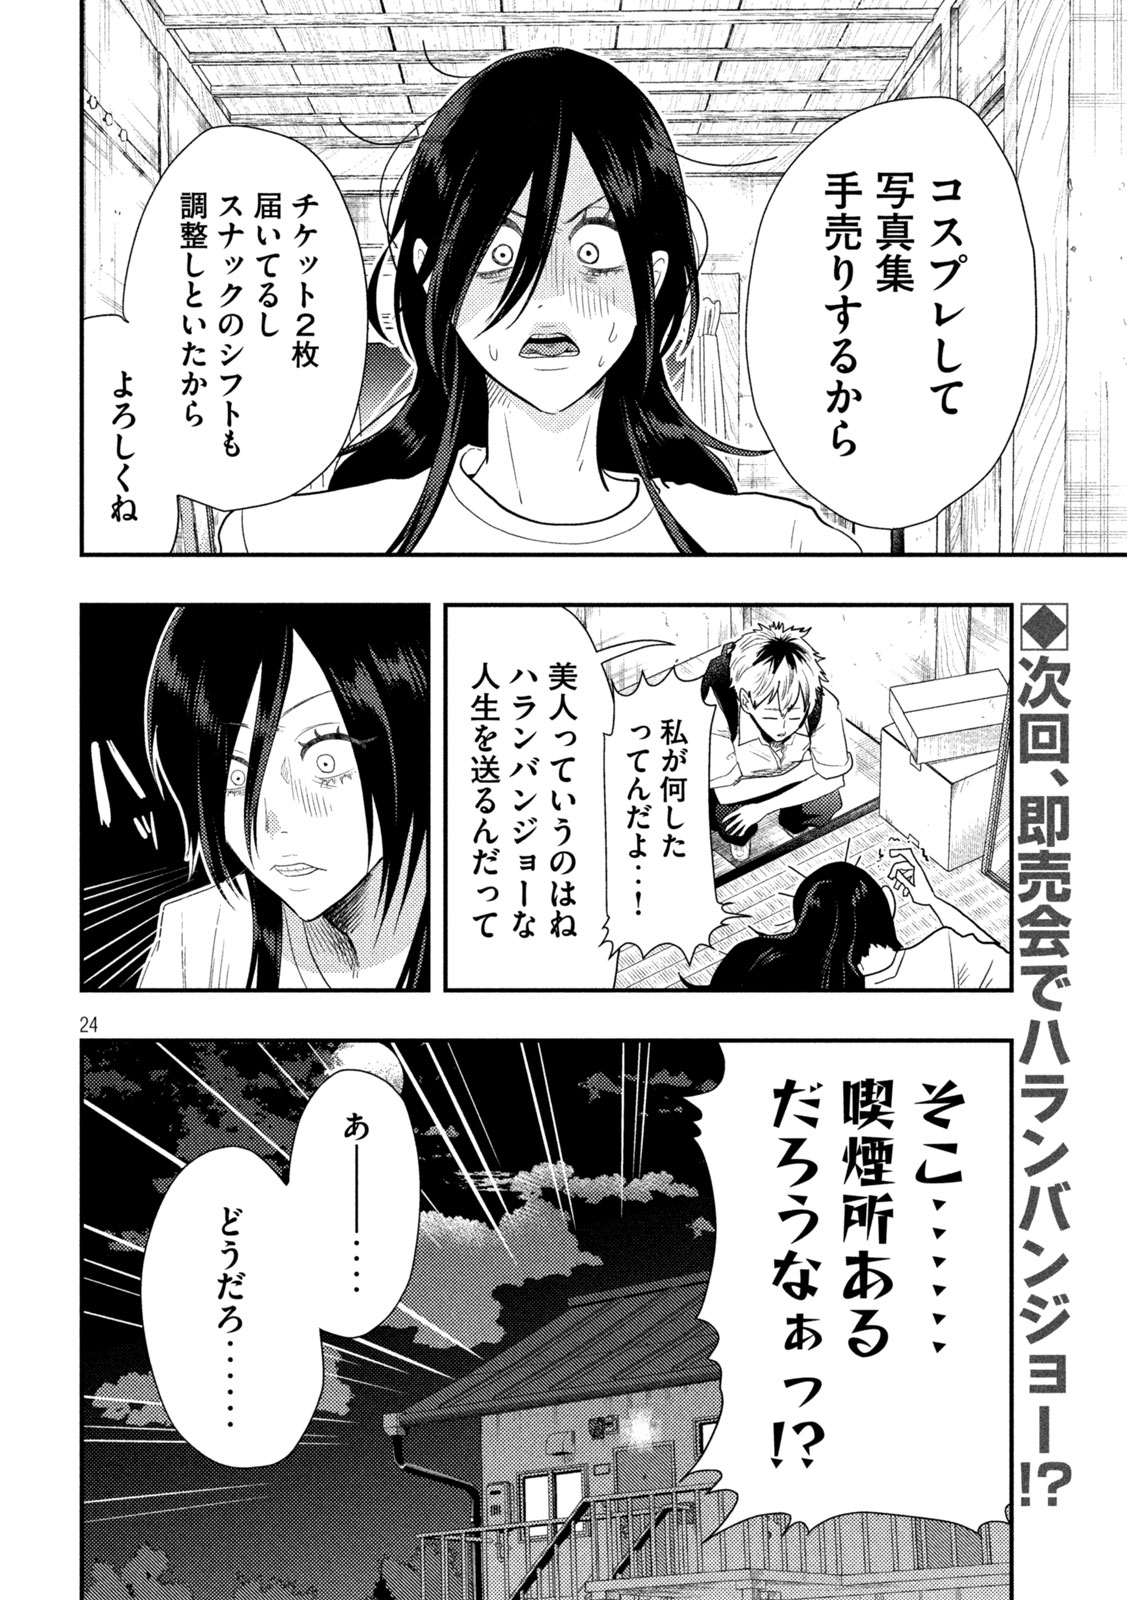 Heisei Haizanhei Sumire-chan - Chapter 2 - Page 24